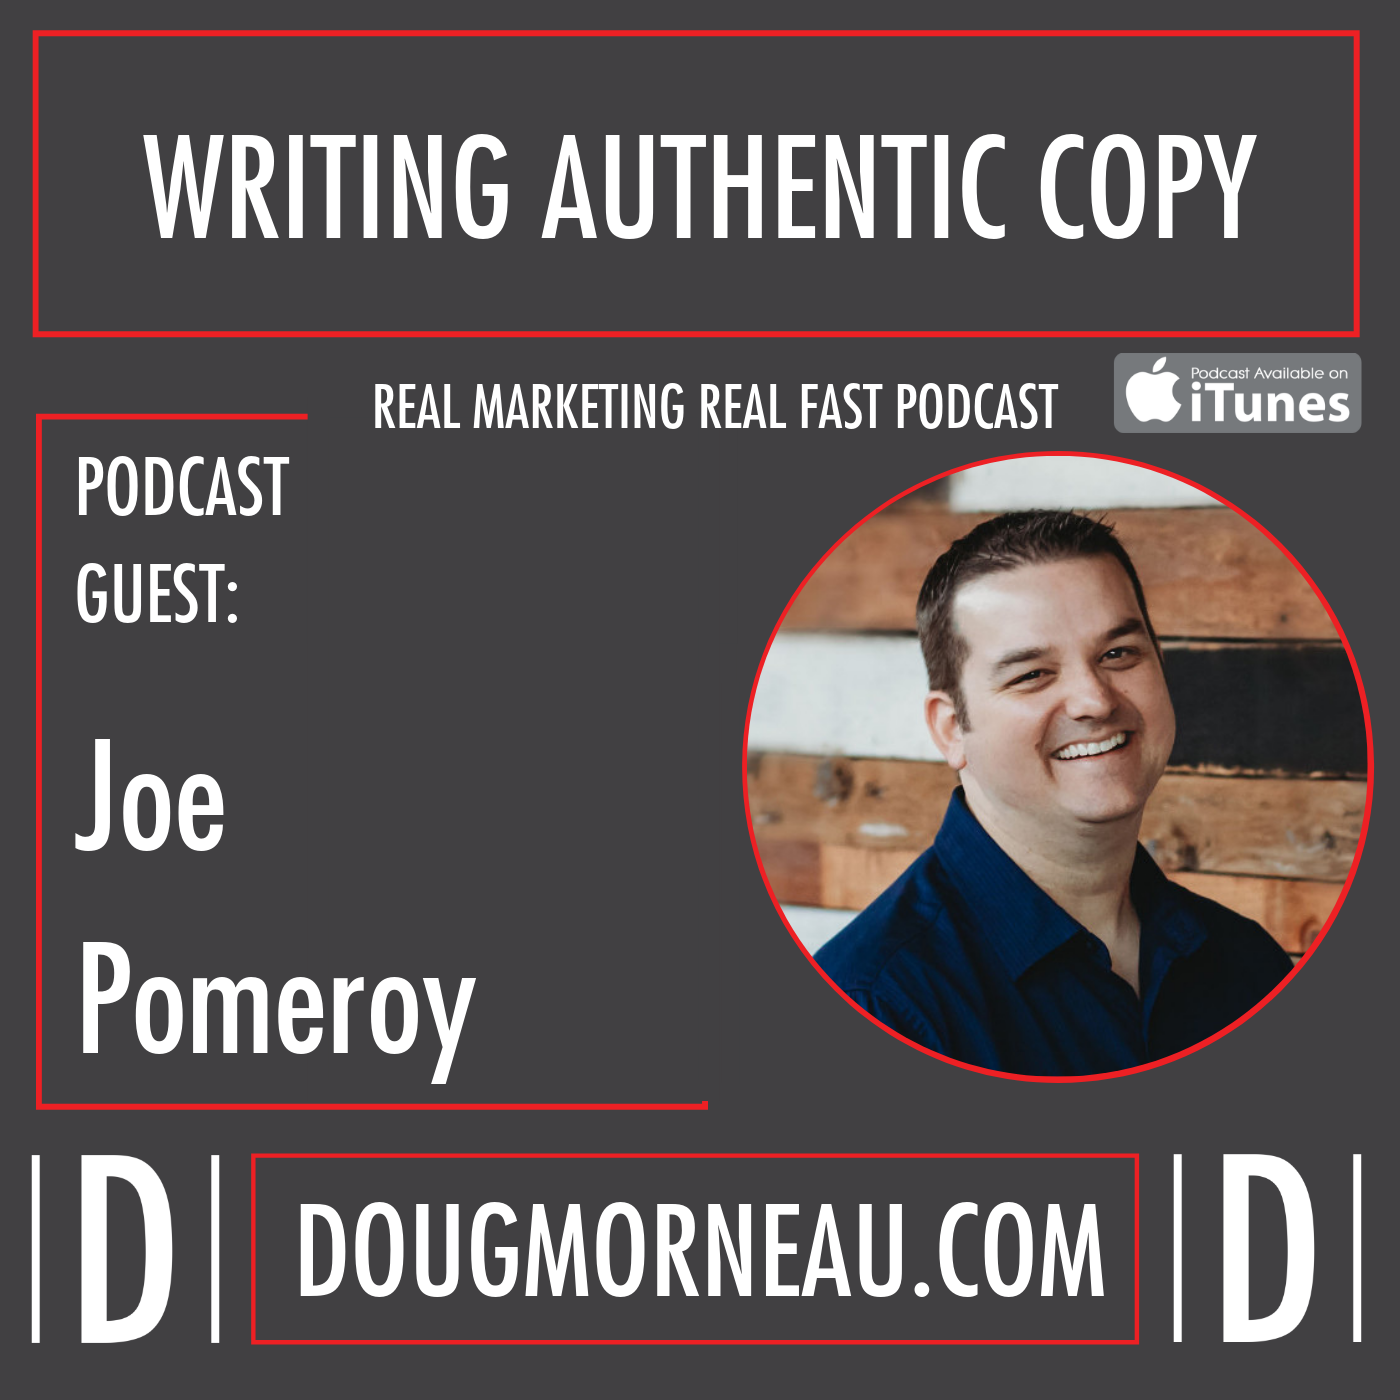 WRITING AUTHENTIC COPY JOE POMEROY - DOUG MORNEAU - REAL MARKETING REAL FAST PODCAST